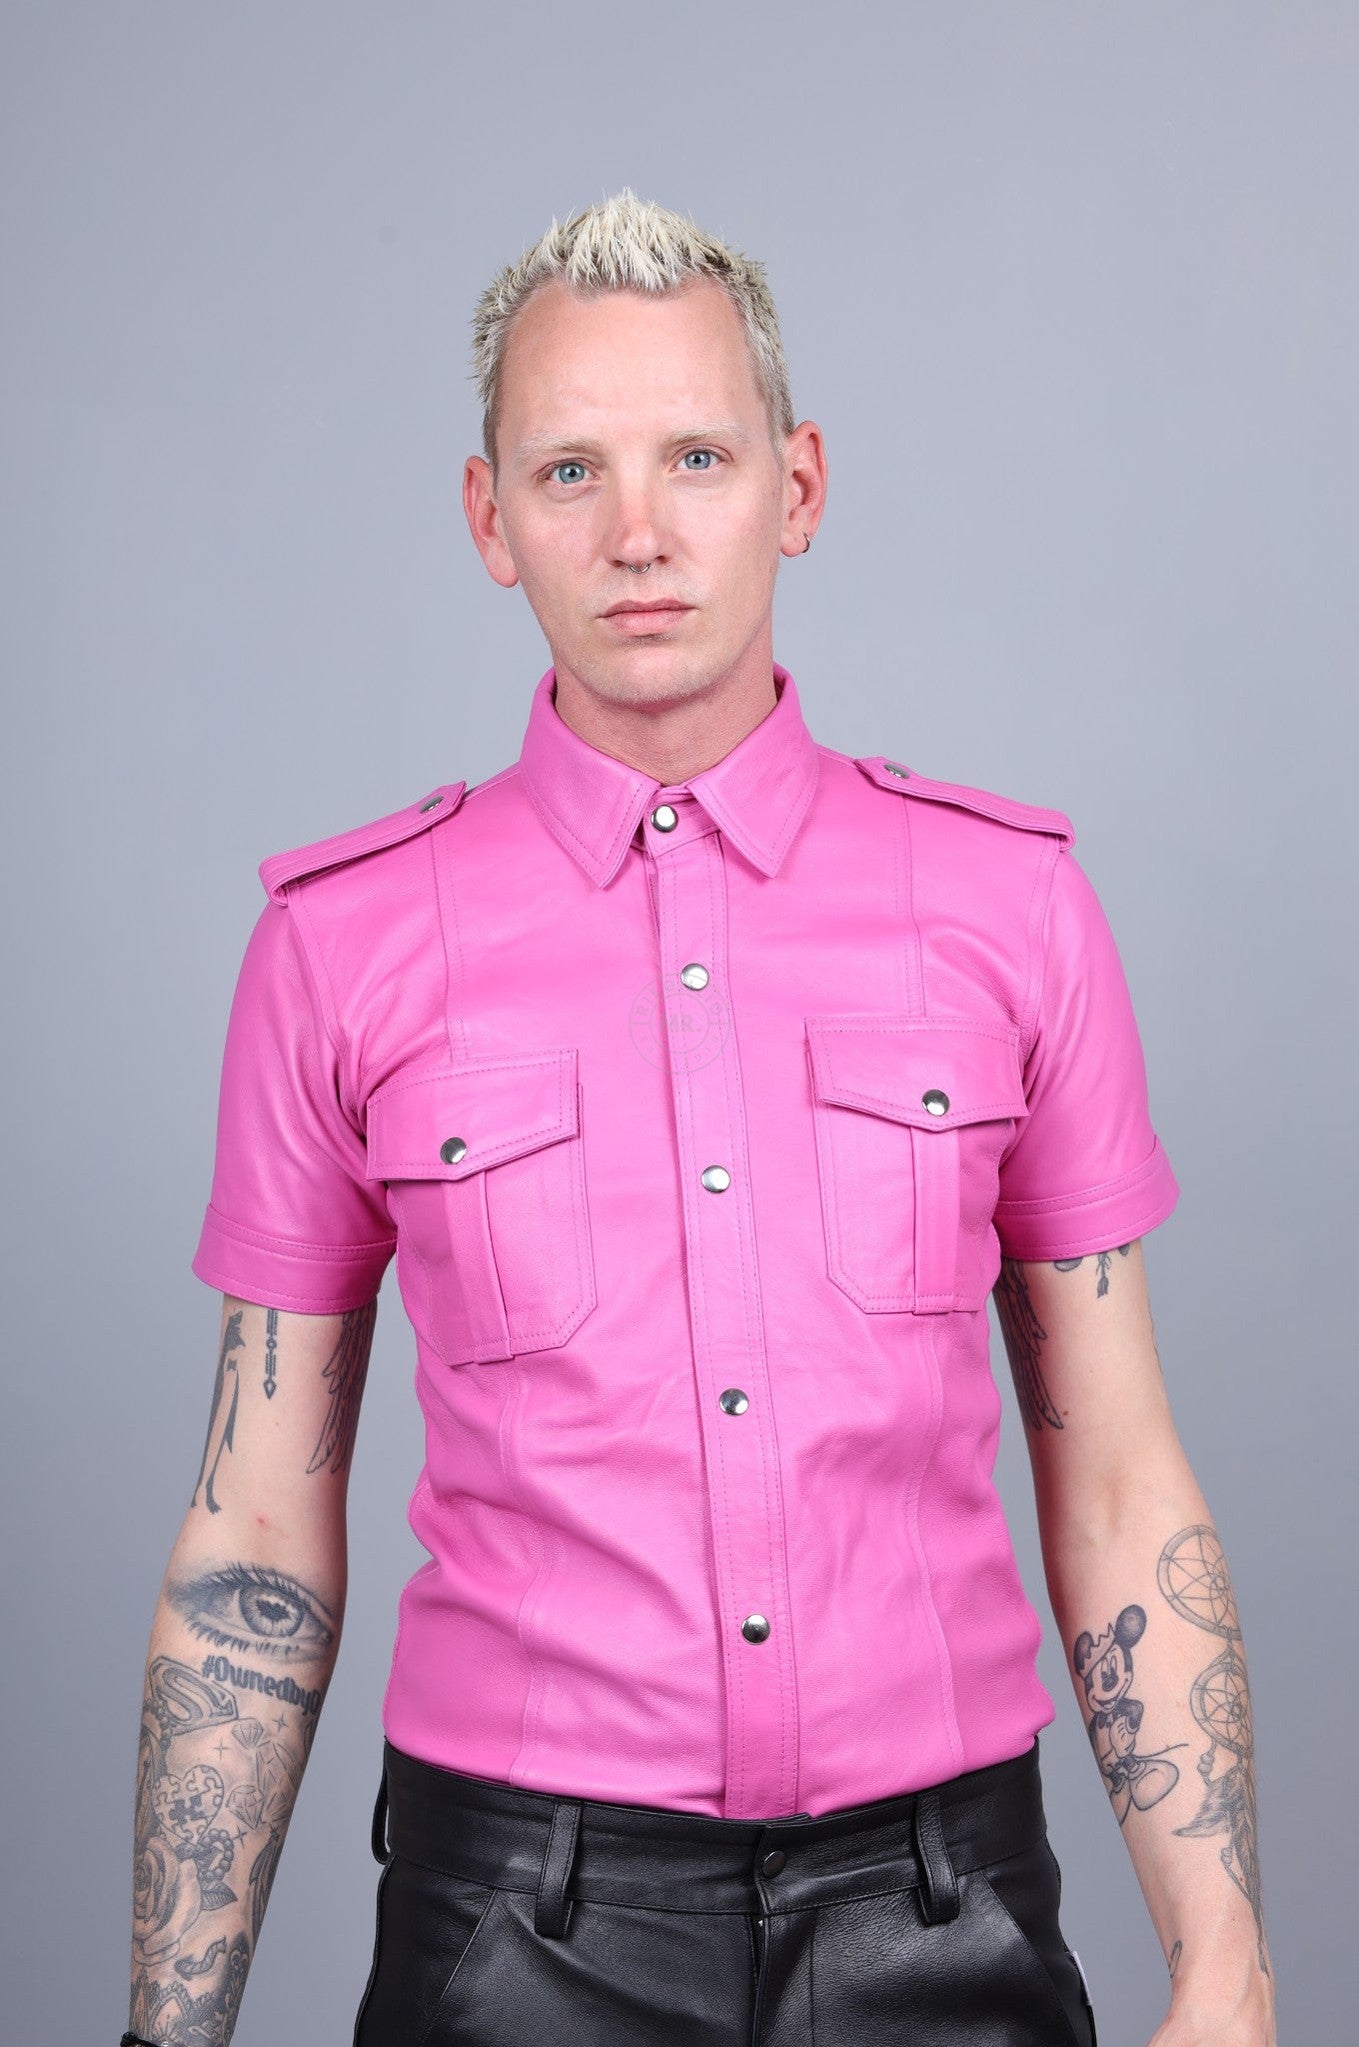 Bright Pink Leather Shirt at MR. Riegillio